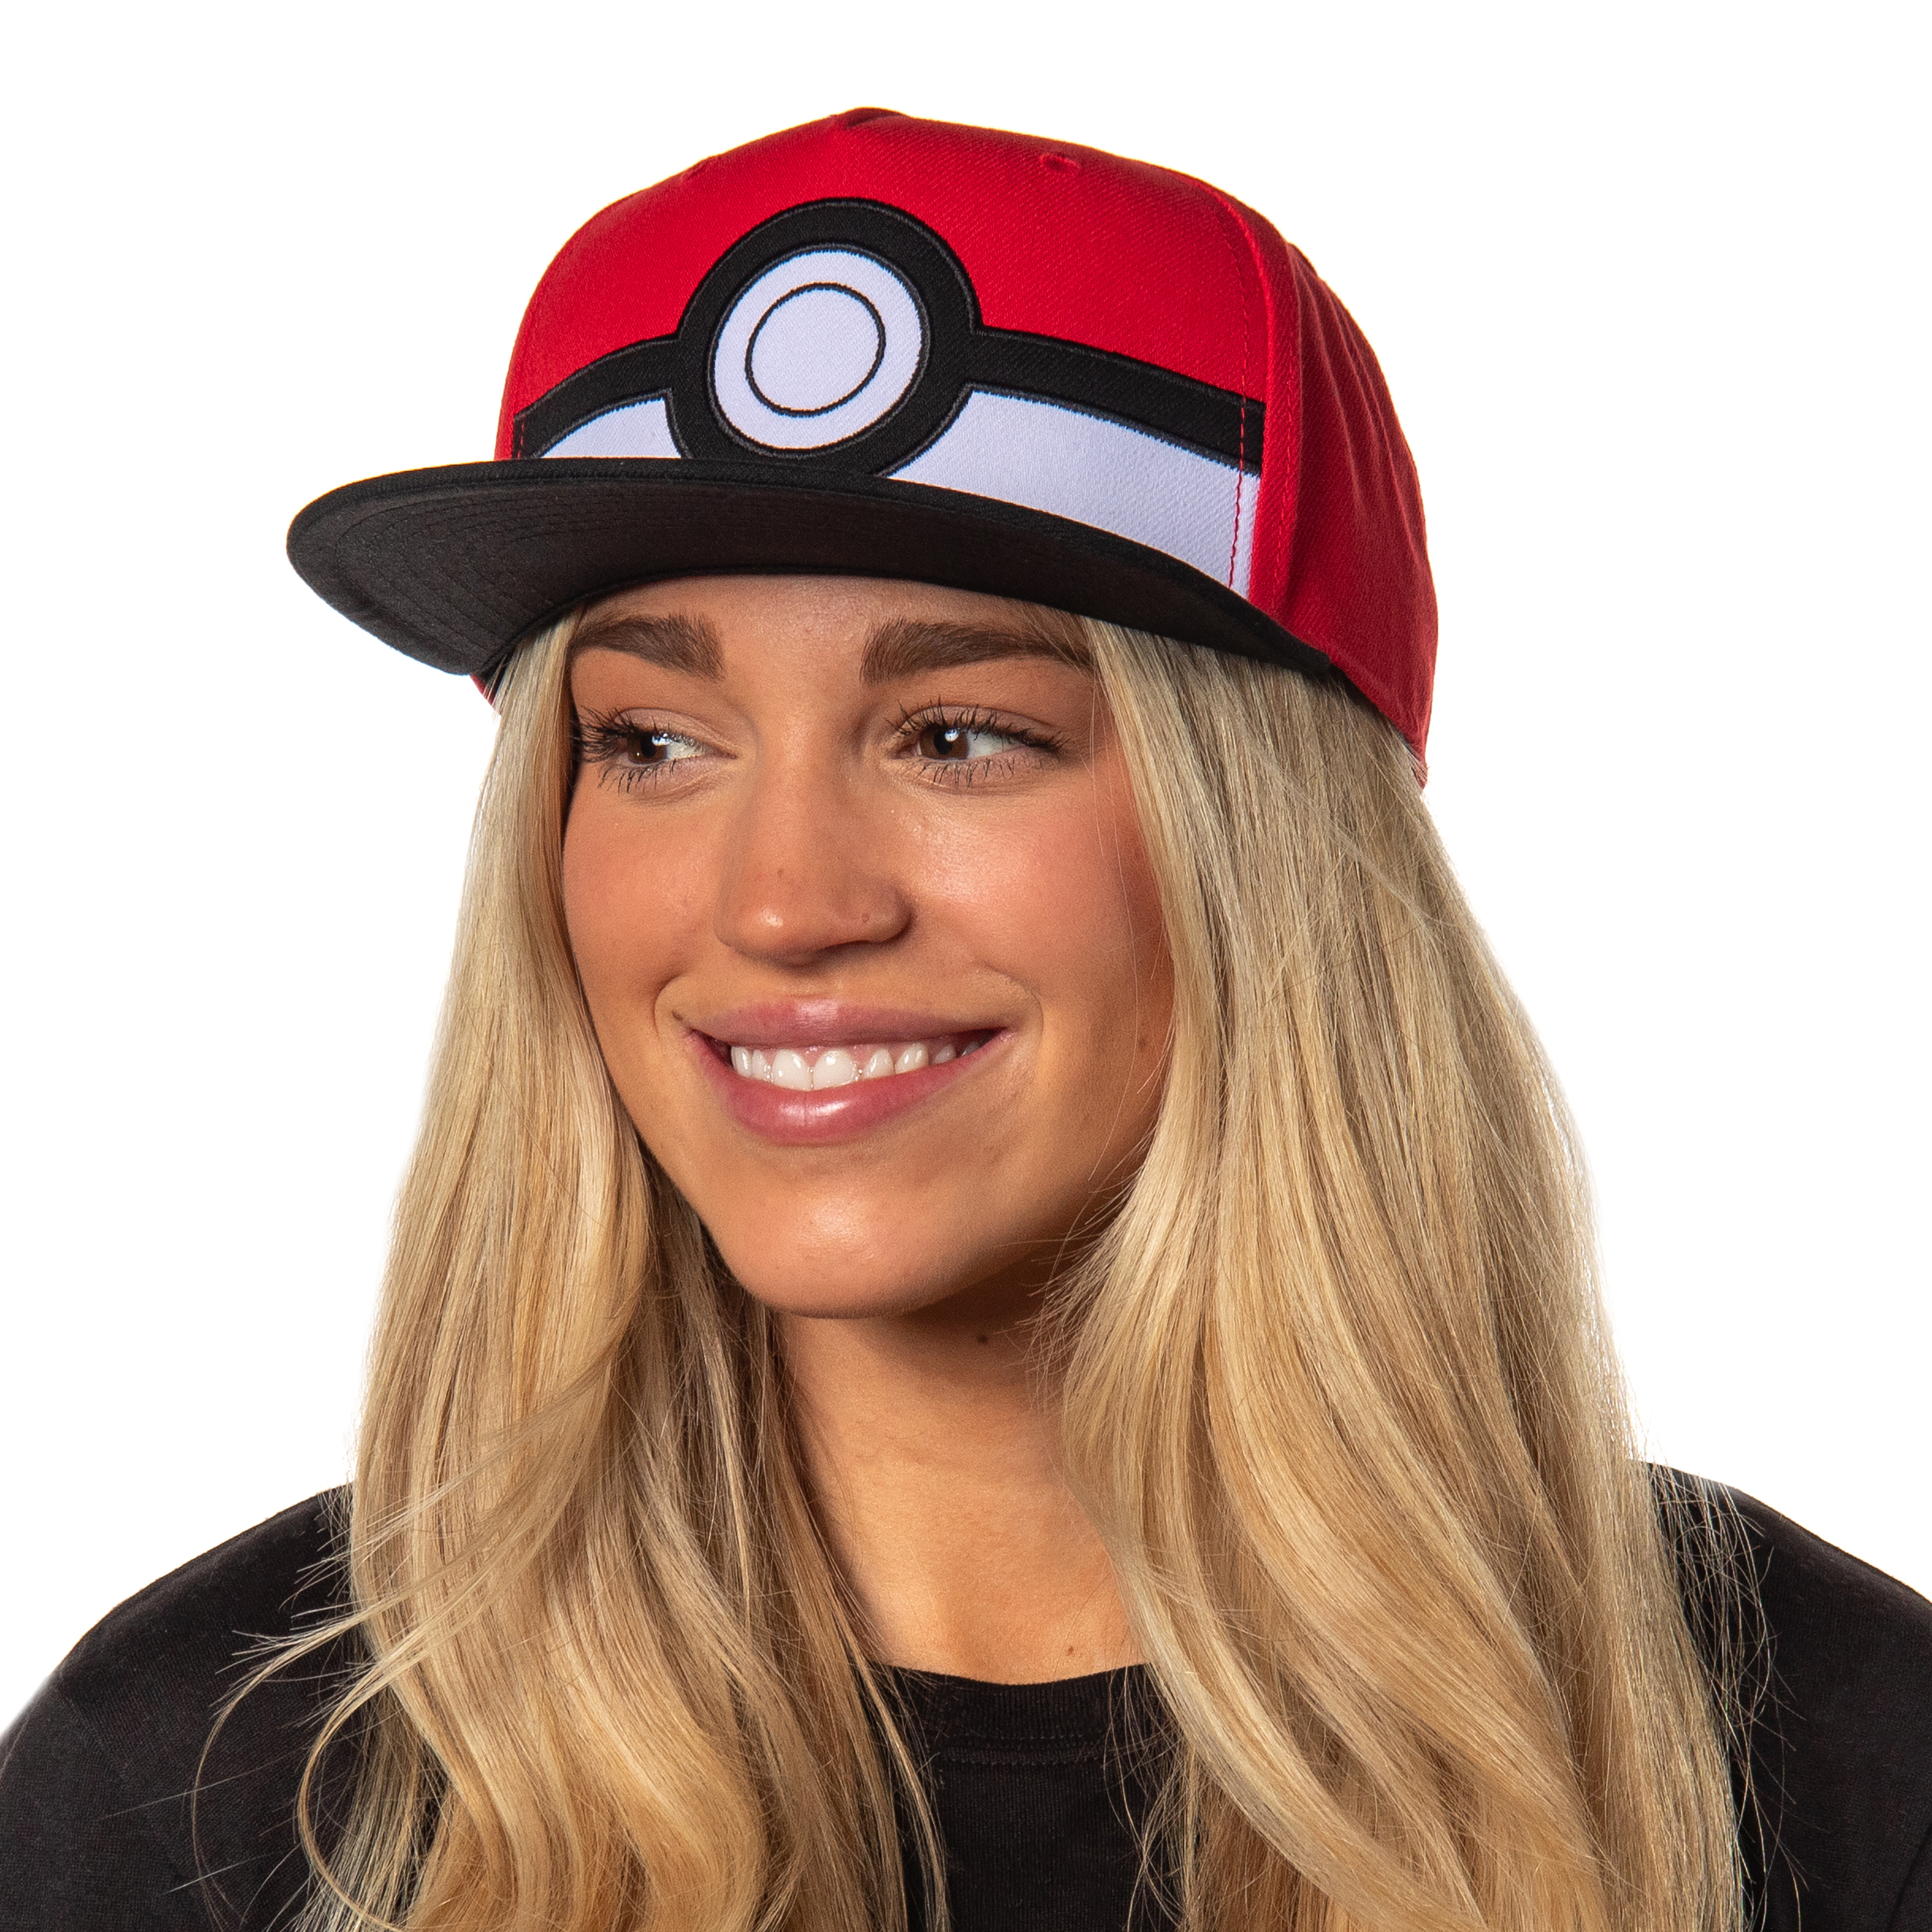 Bioworld Pokemon Men's Poke Ball Embroidered Logo Flatbill Adjustable Snapback Adult Hat